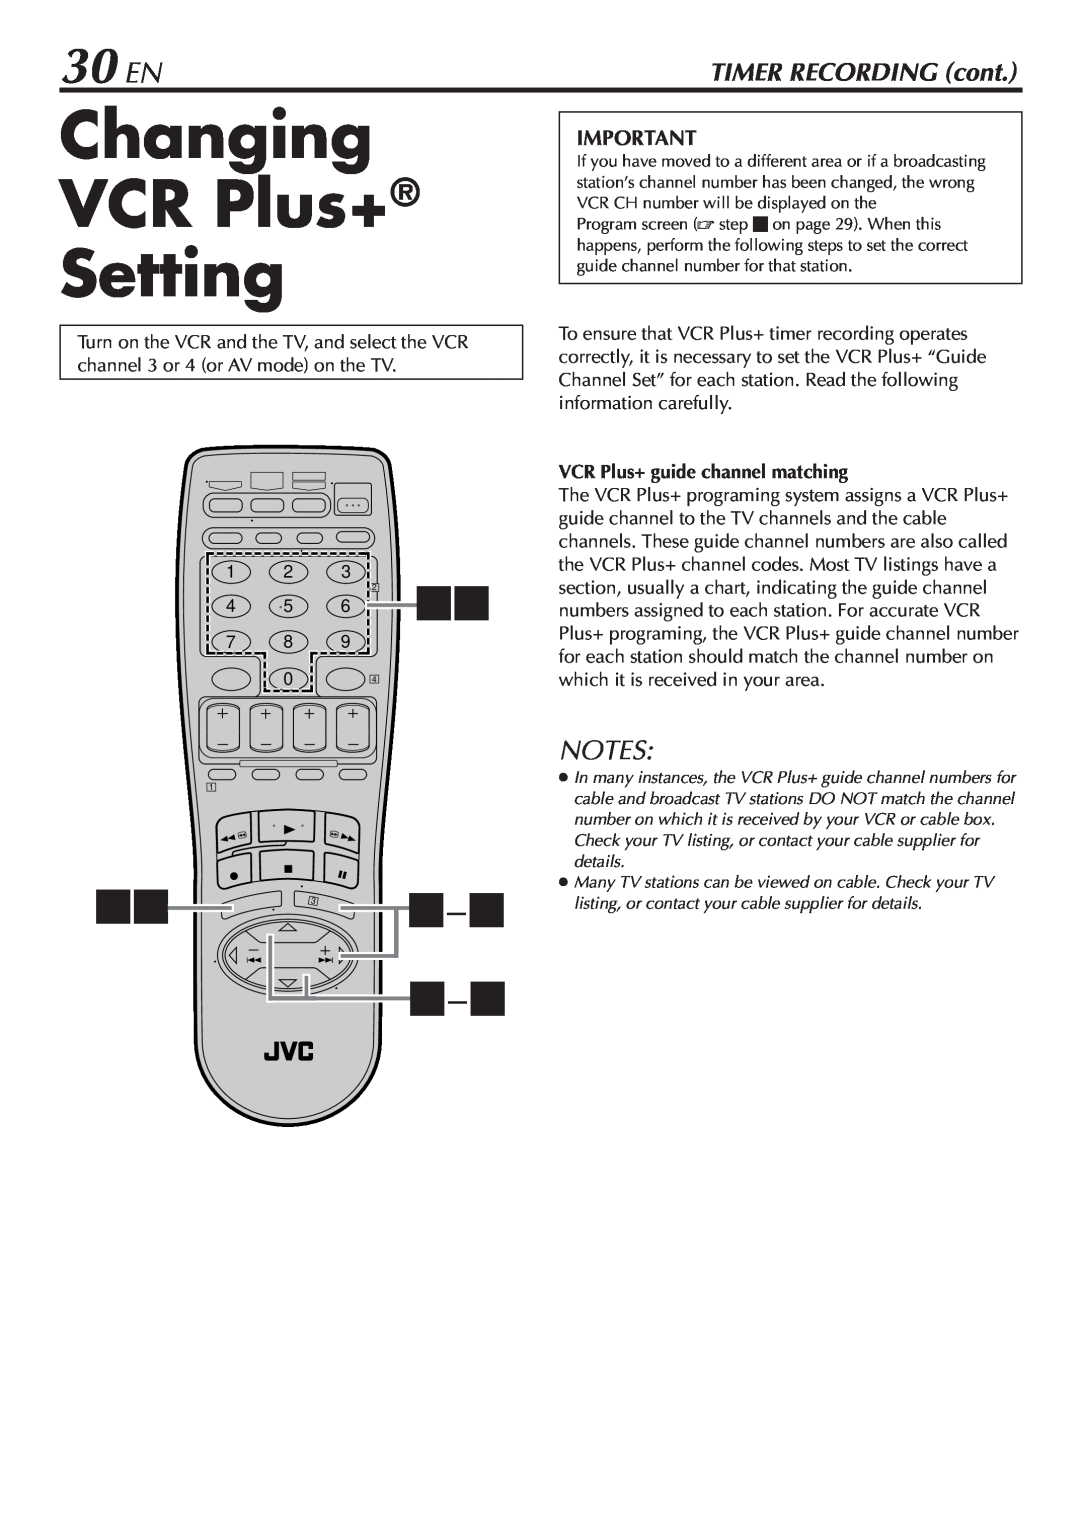 JVC SR-V10U manual Changing VCR Plus+ Setting, 30 EN, 162-5, TIMER RECORDING cont 